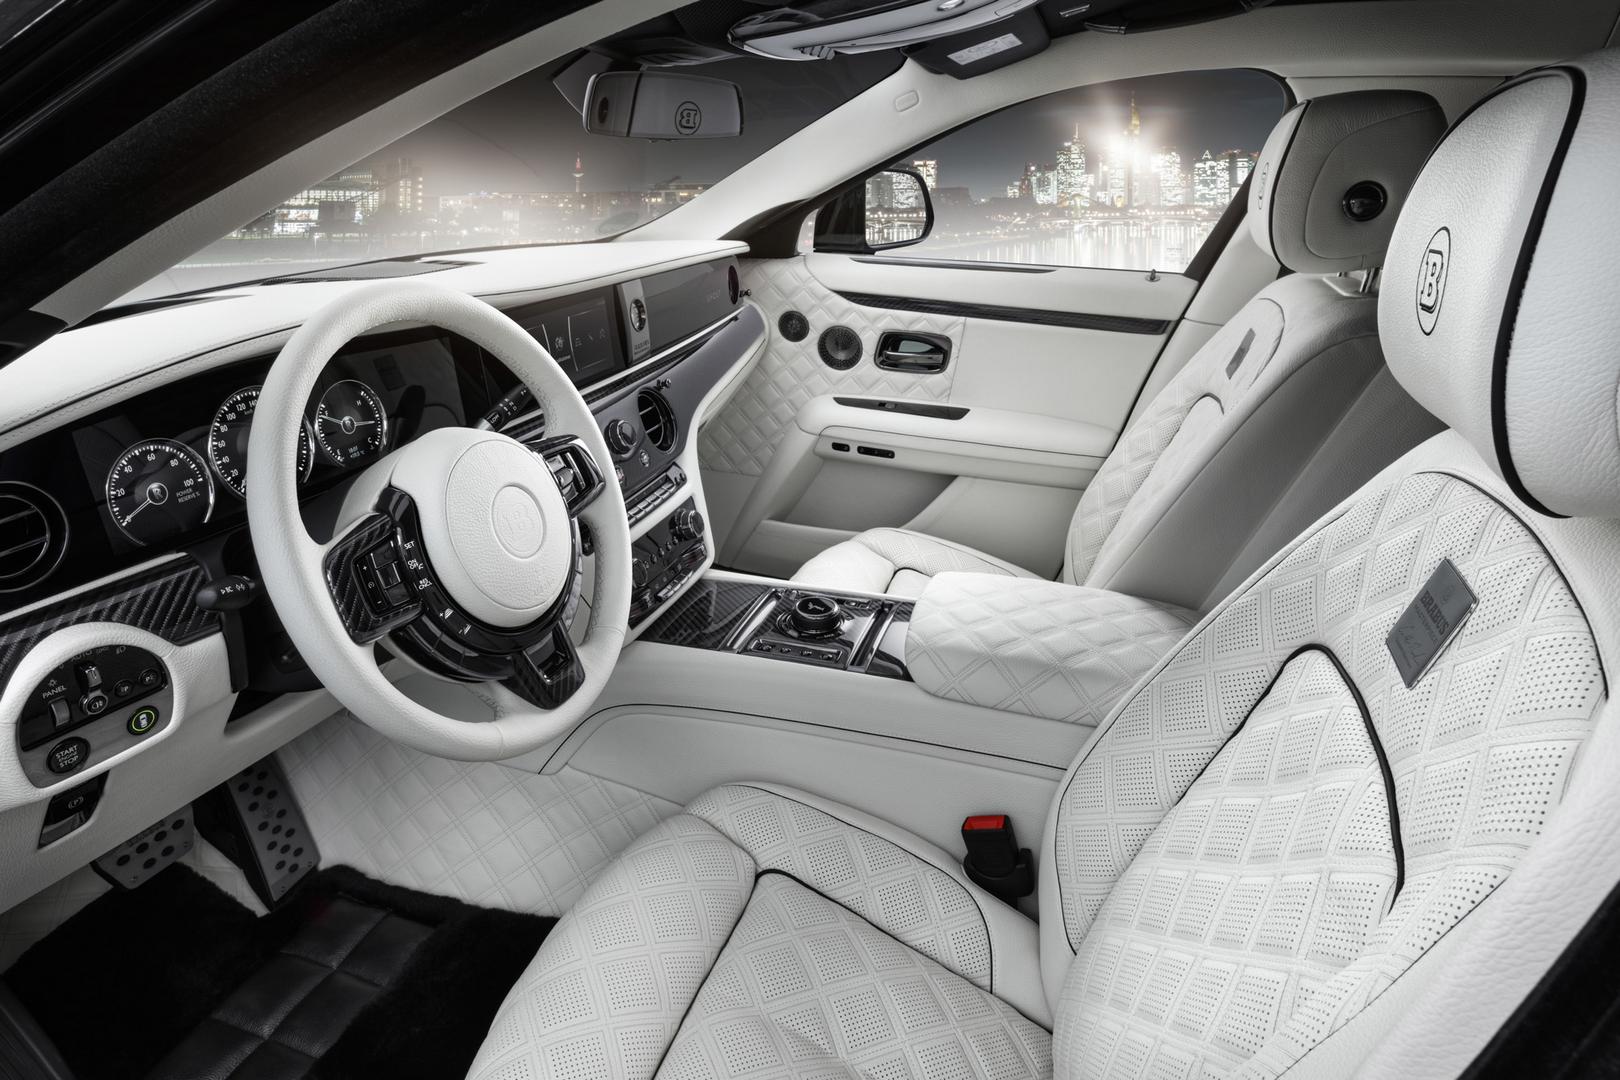 Brabus Rolls-Royce Ghost interior